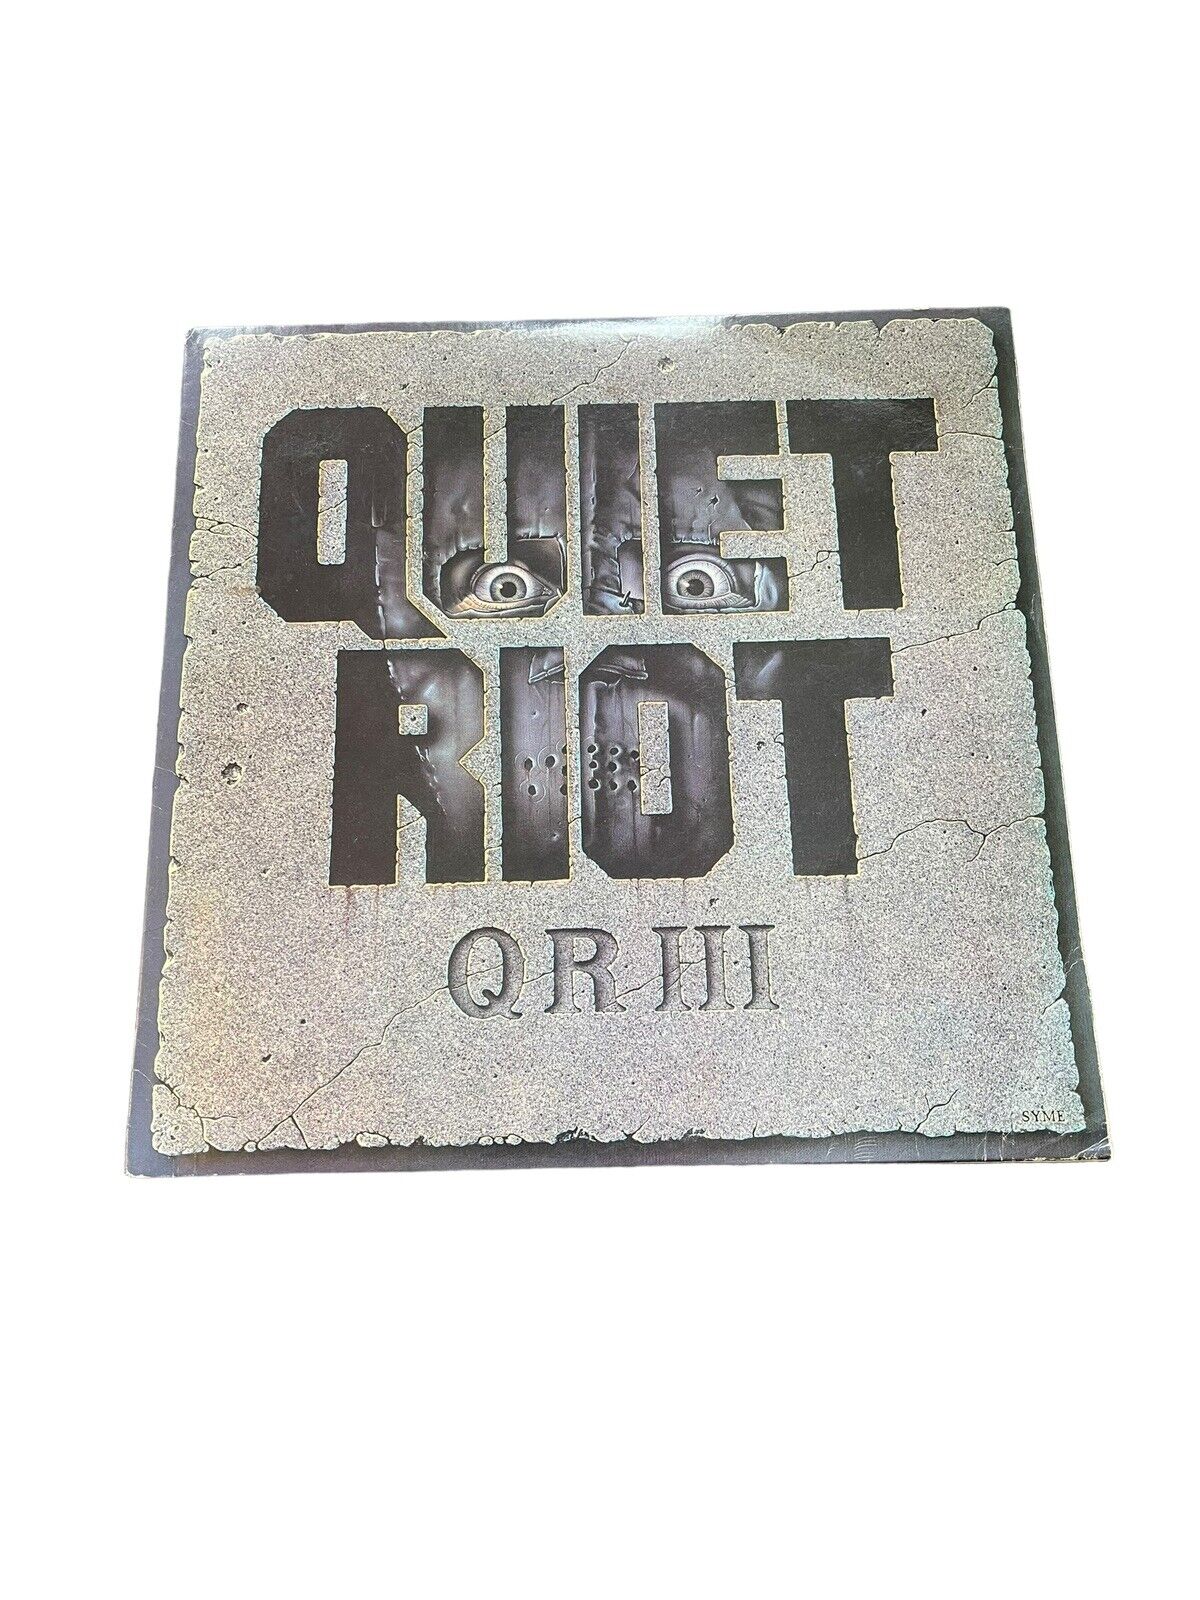 Quiet Riot QR III Vinyl Record 1986 Pasha Vintage Hard Rock Hair Metal LP Promo